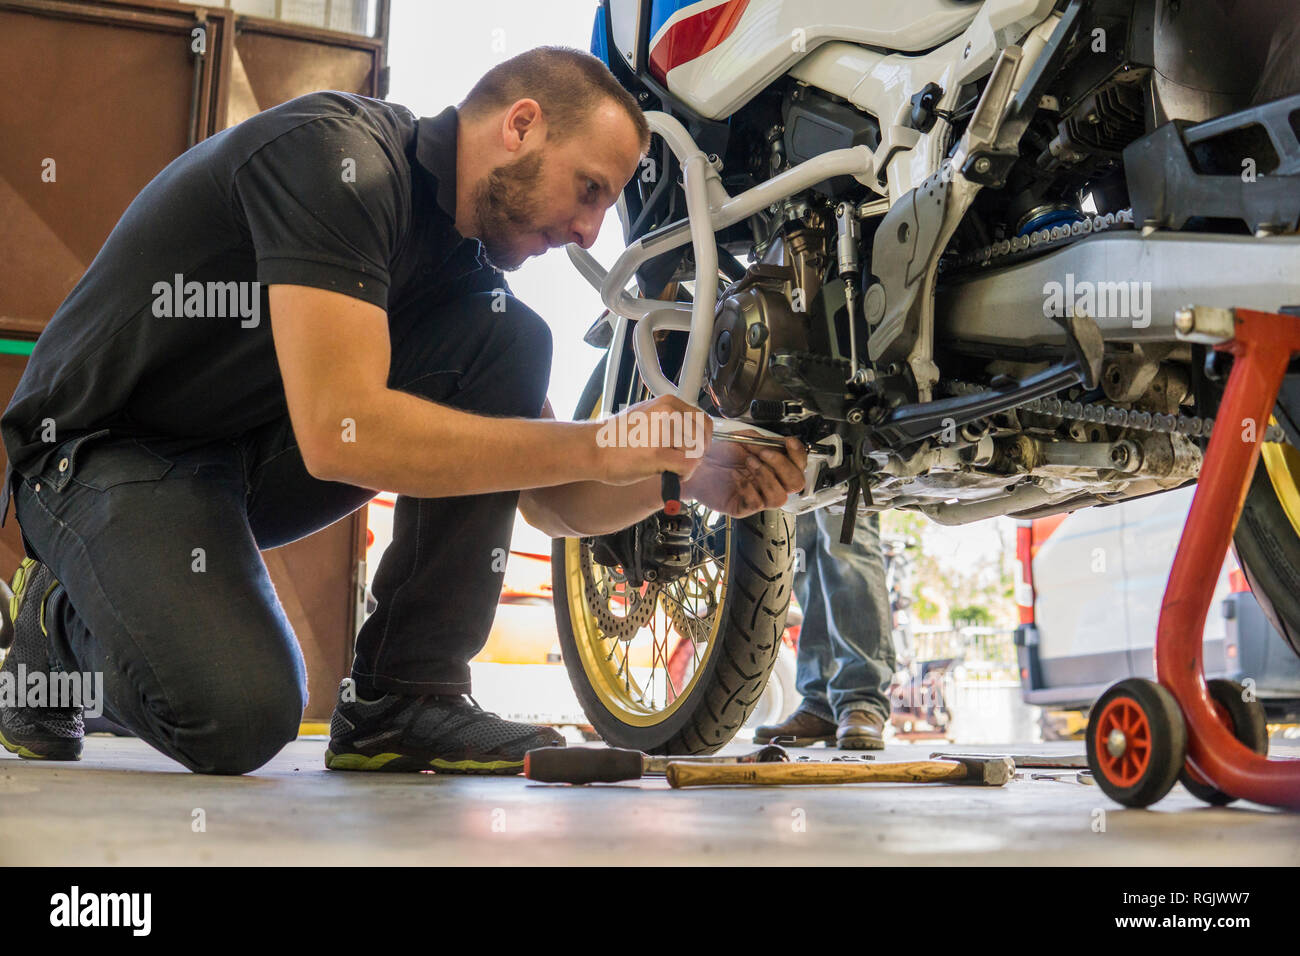 Mechaniker arbeiten am Motorrad in Werkstatt Stockfotografie - Alamy